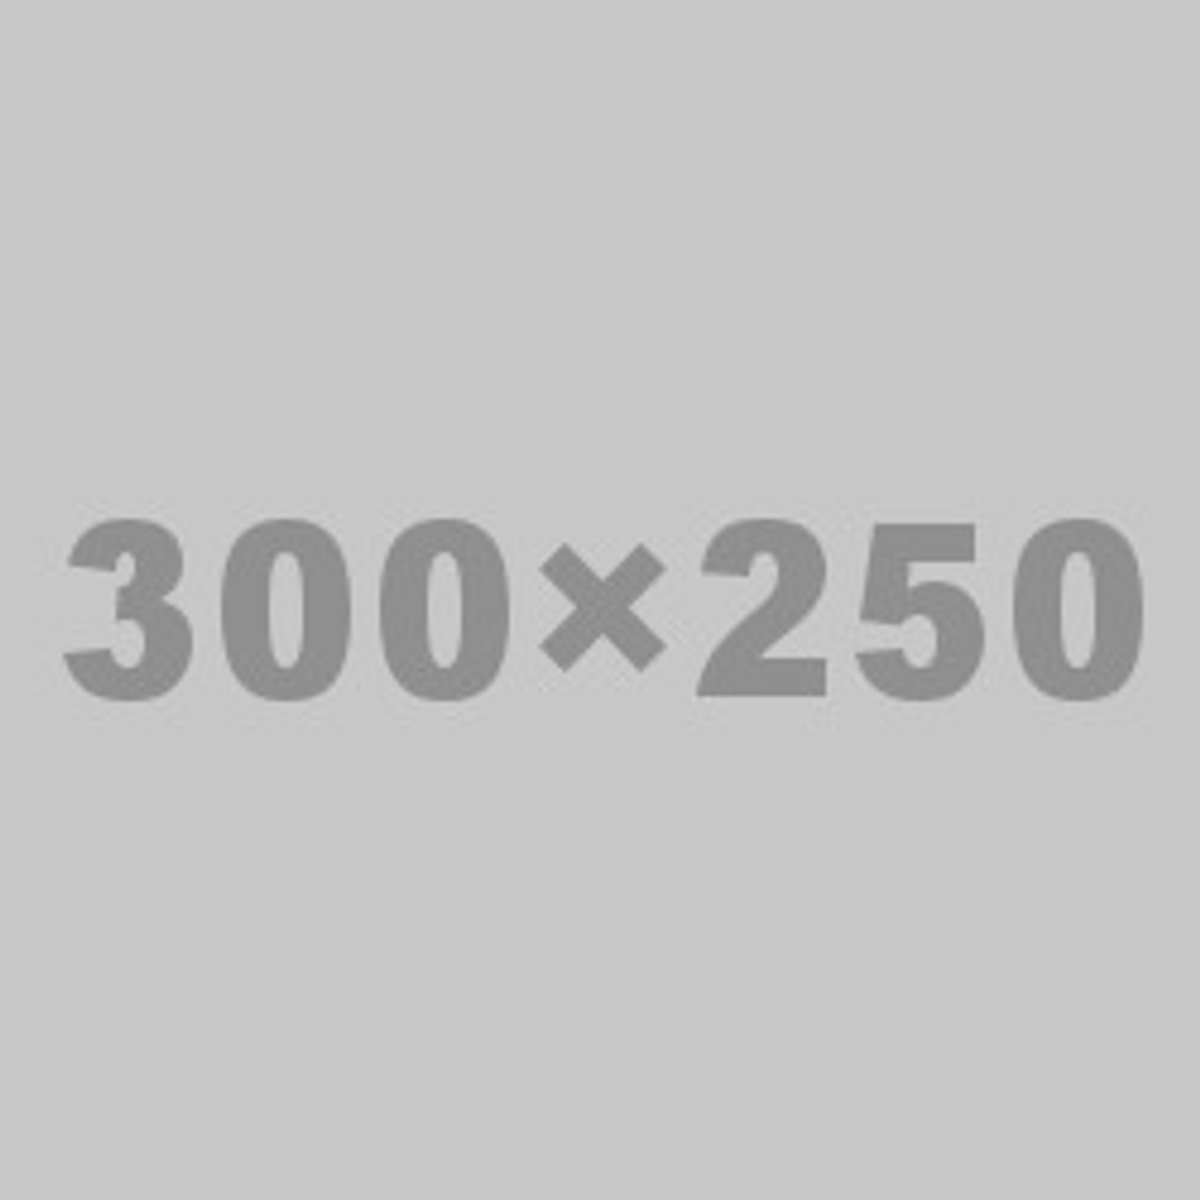 X 300 0. 400:100 Изображение. Изображения 300 на 250. Фото 300 на 300 пикселей. Изображение 300 на 200 пикселей.